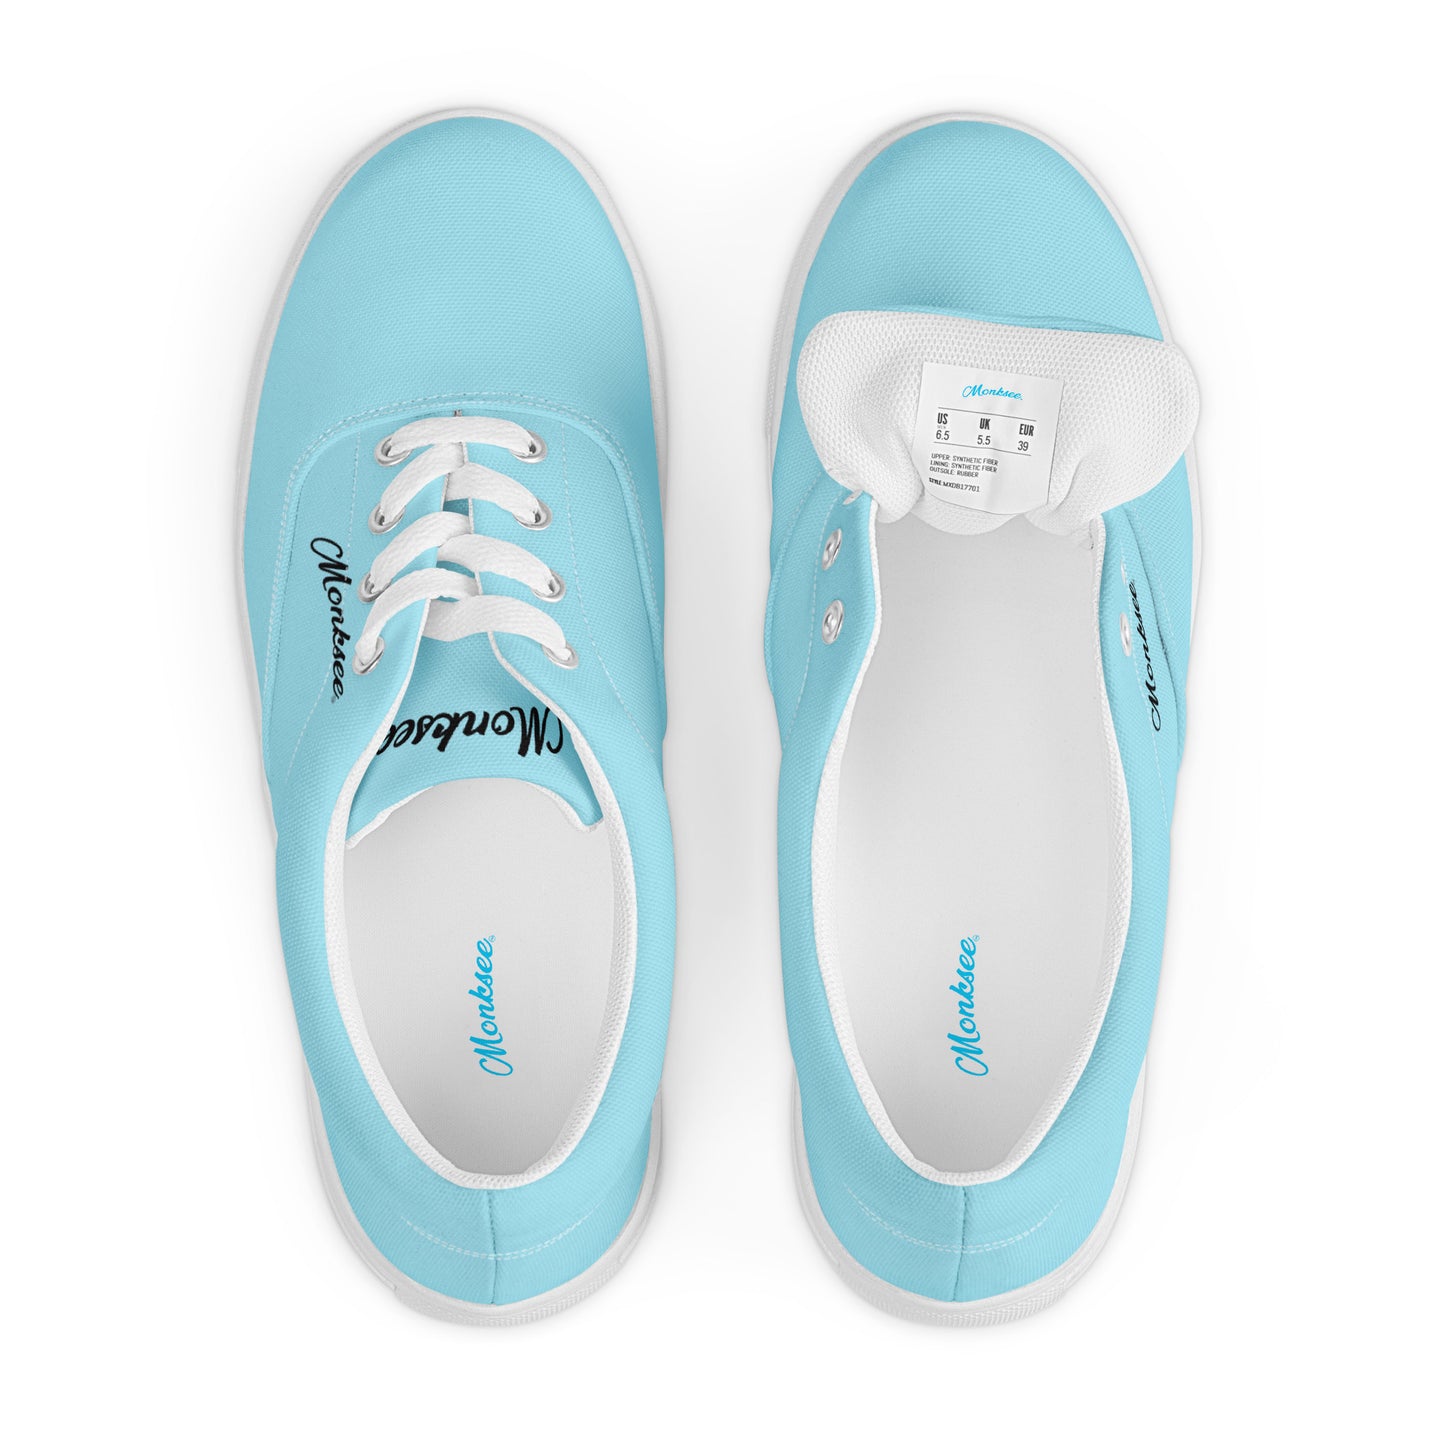 Stoked blue - Men’s Canvas shoes